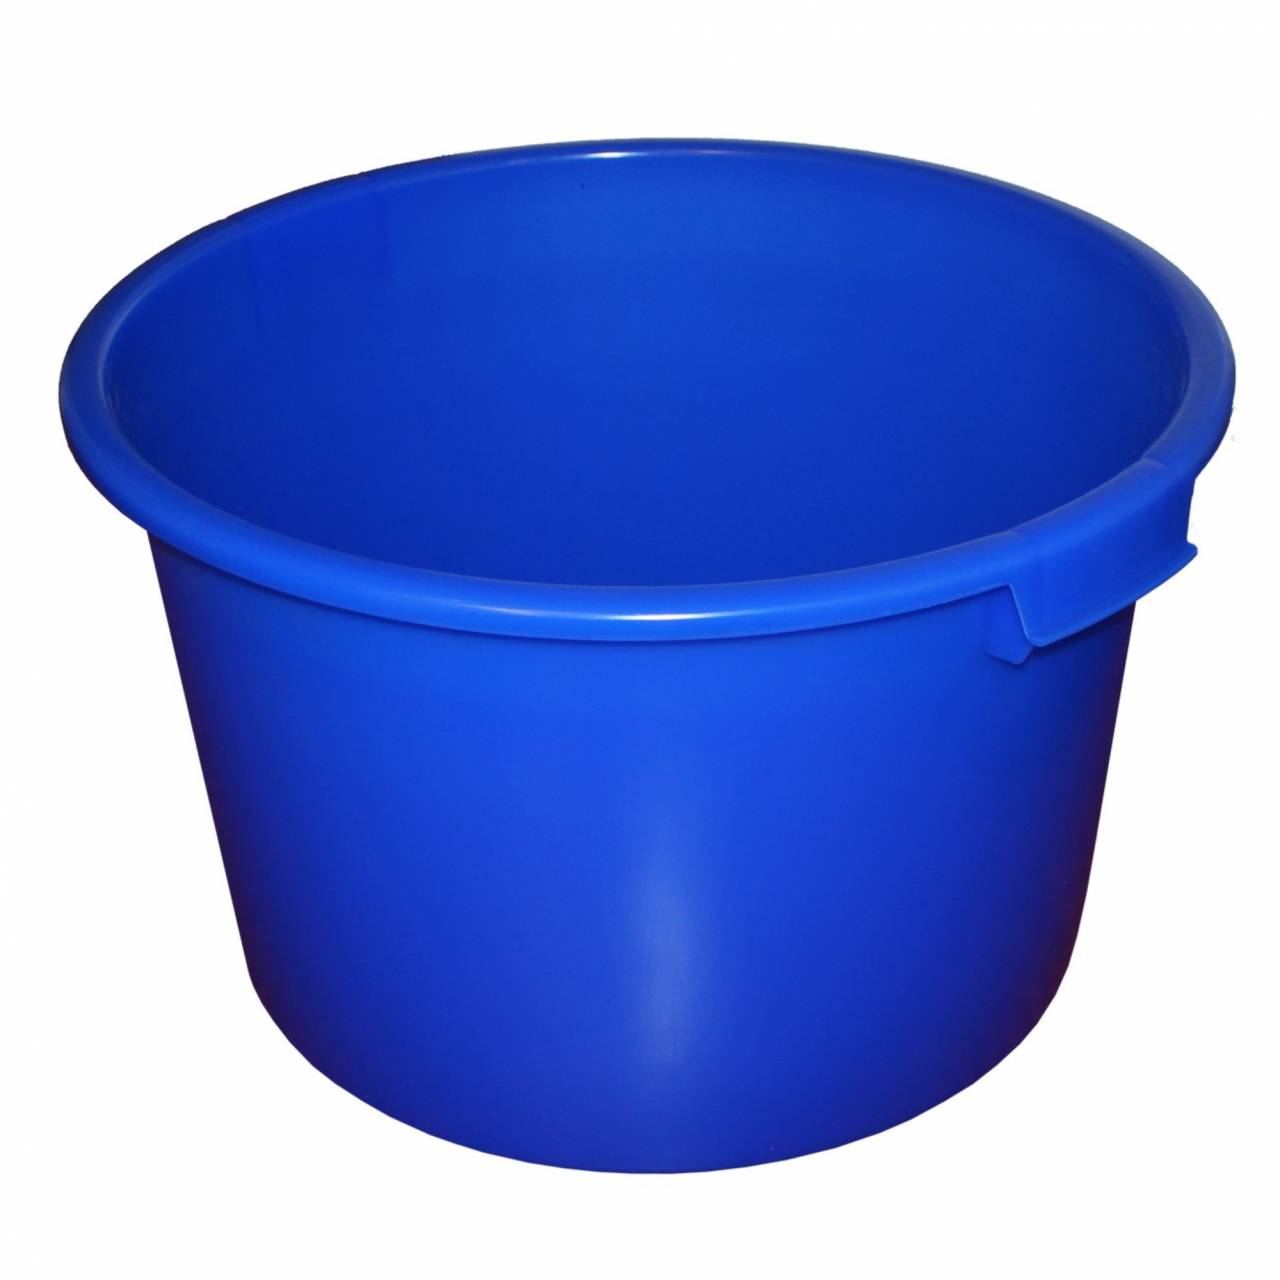 Mörtel-Kübel 90,0 l, Ø 66,5 cm, 'Profi', blau